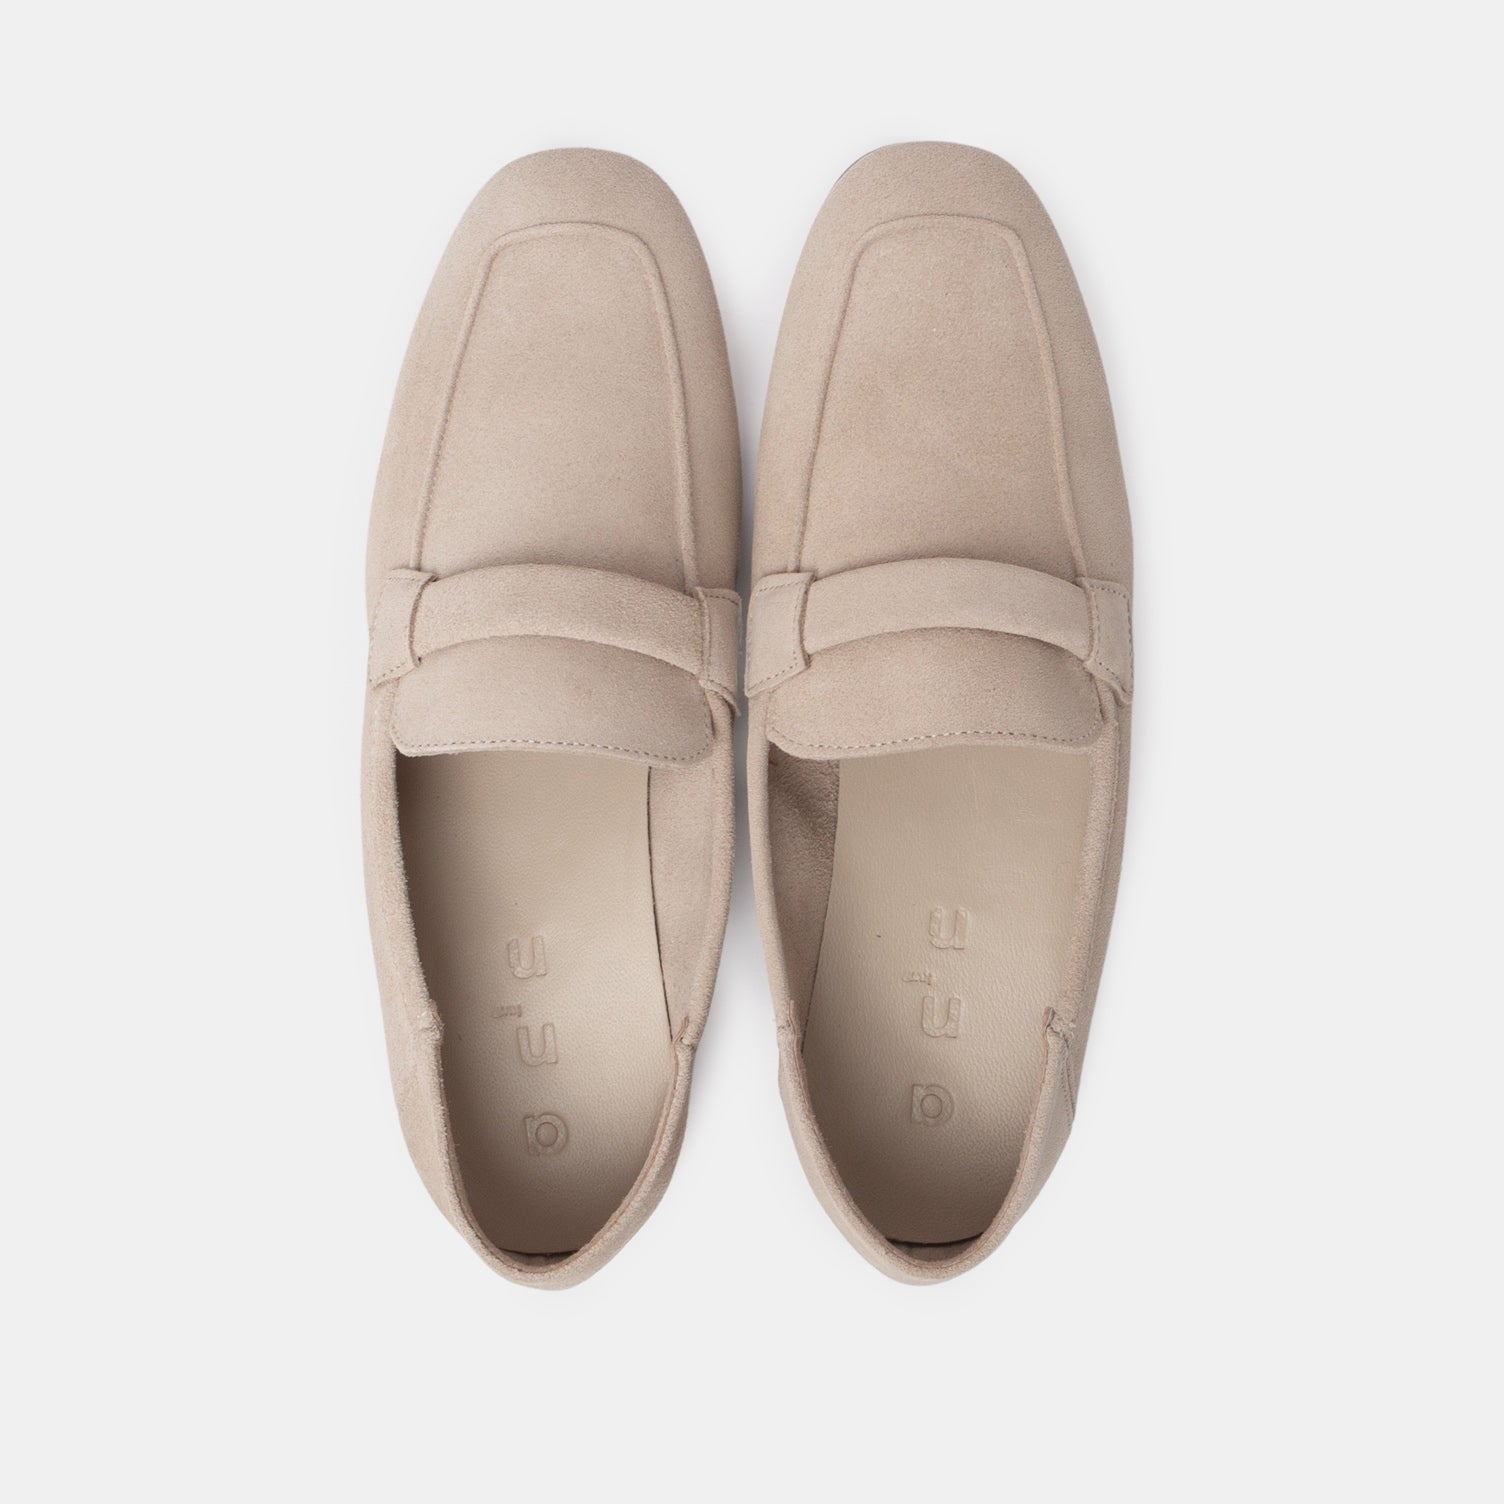 Loafer One-ann Shoe | New -Suede Lavender Blue- ann kurz